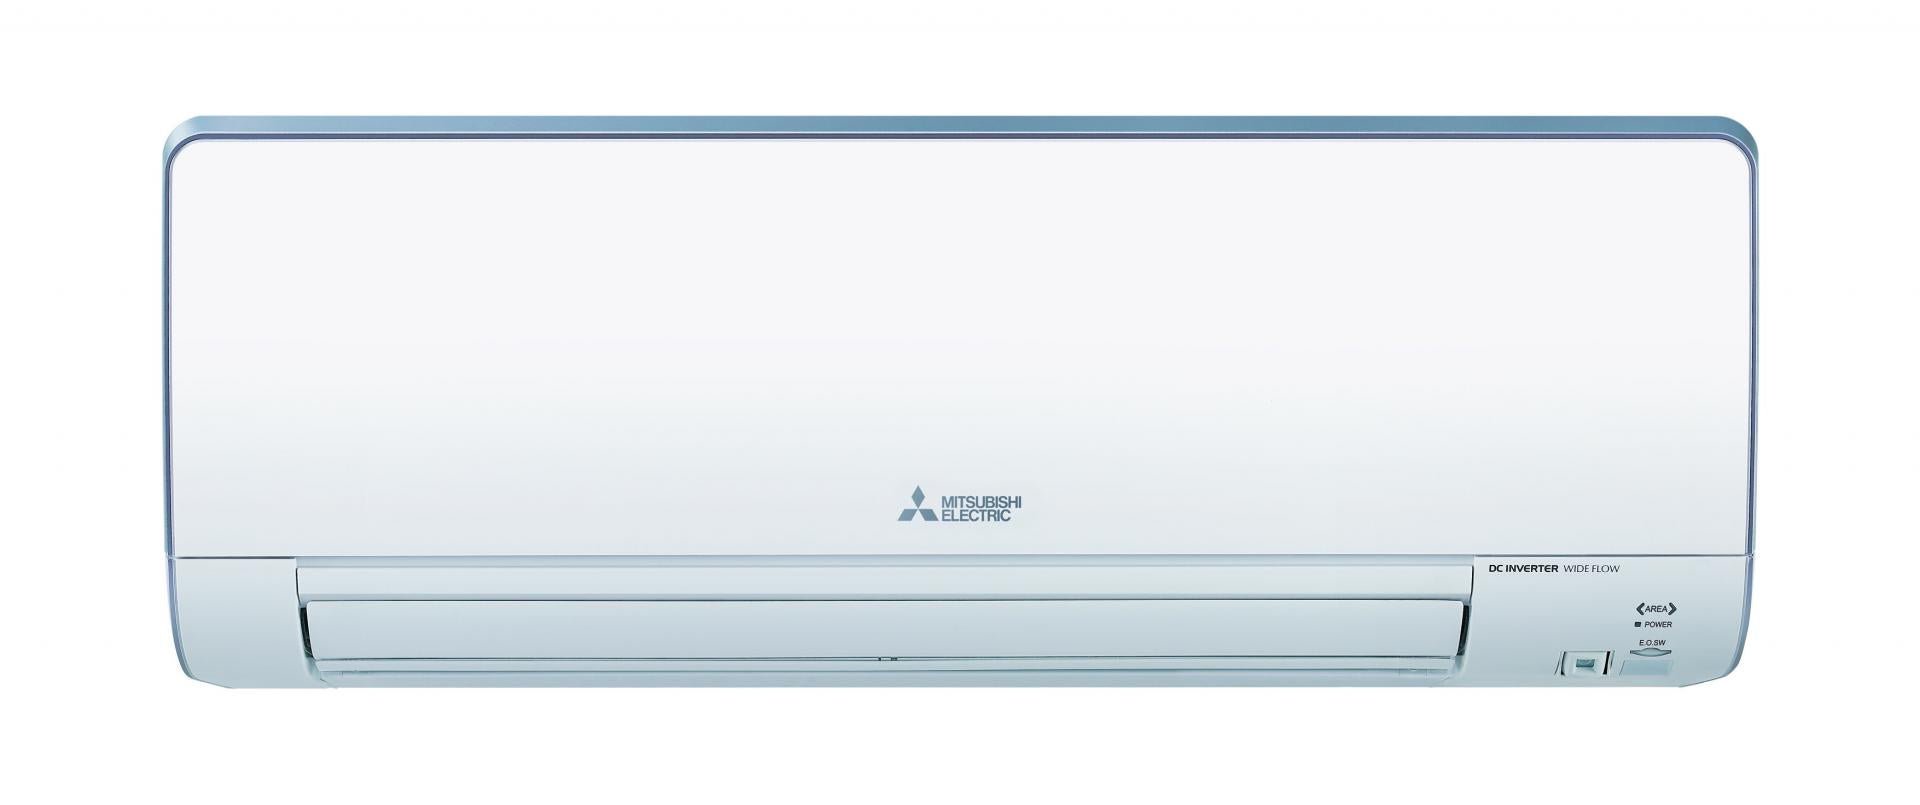 Mitsubishi 三菱電機 MSZ - YK18VA - H1 2匹 變頻冷暖分體式冷氣機 - Fever Electrics 電器熱網購平台